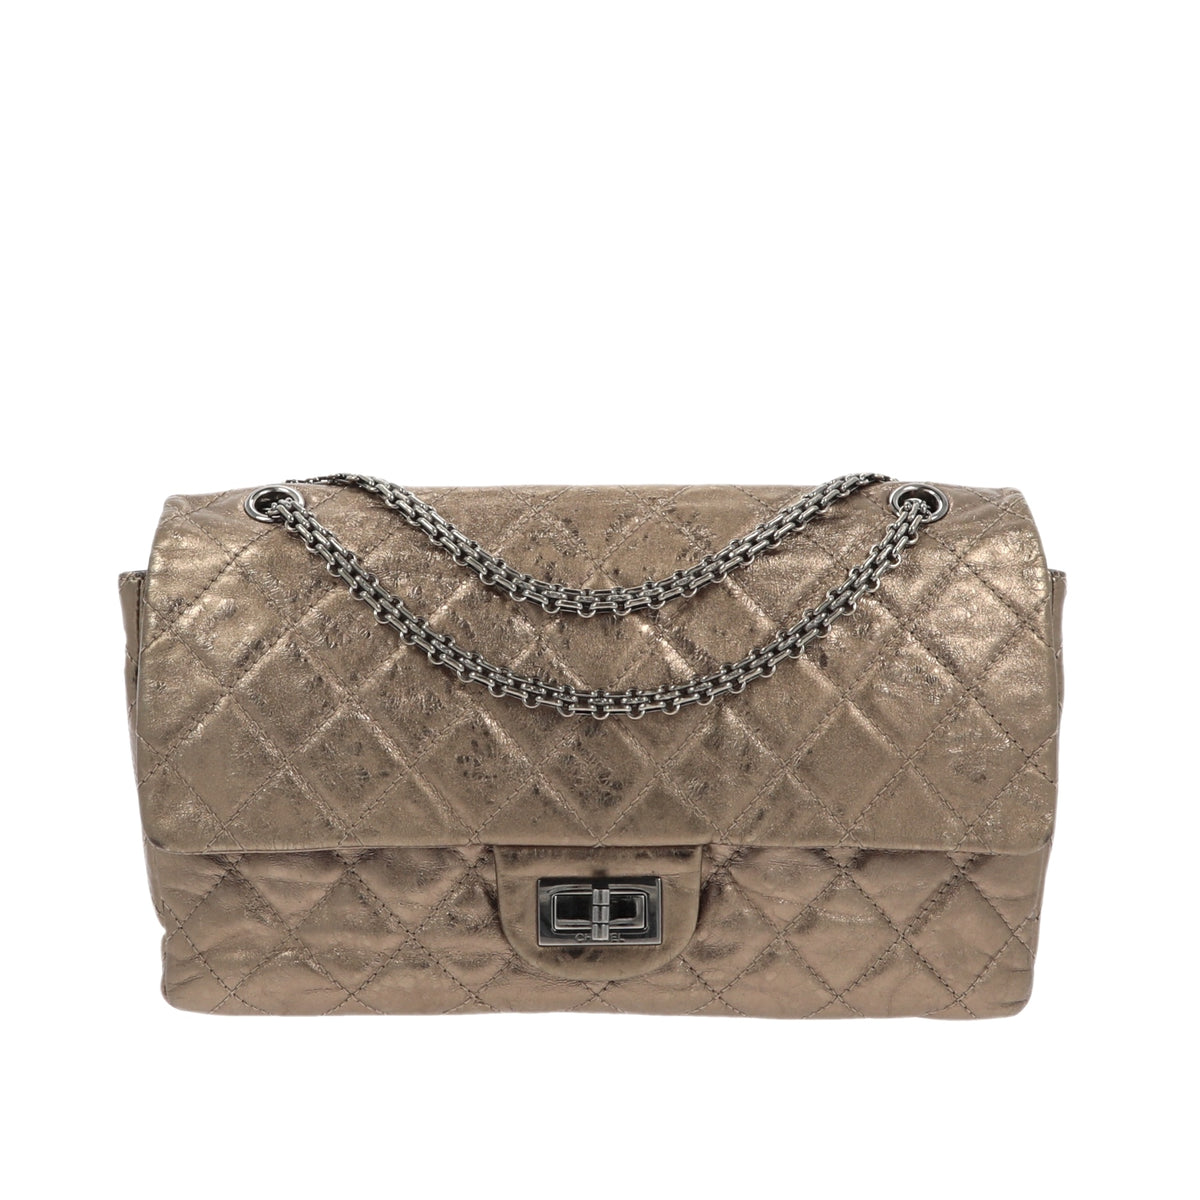 Chanel 2.55 Shoulder Bag in Metallic Leather – Fancy Lux